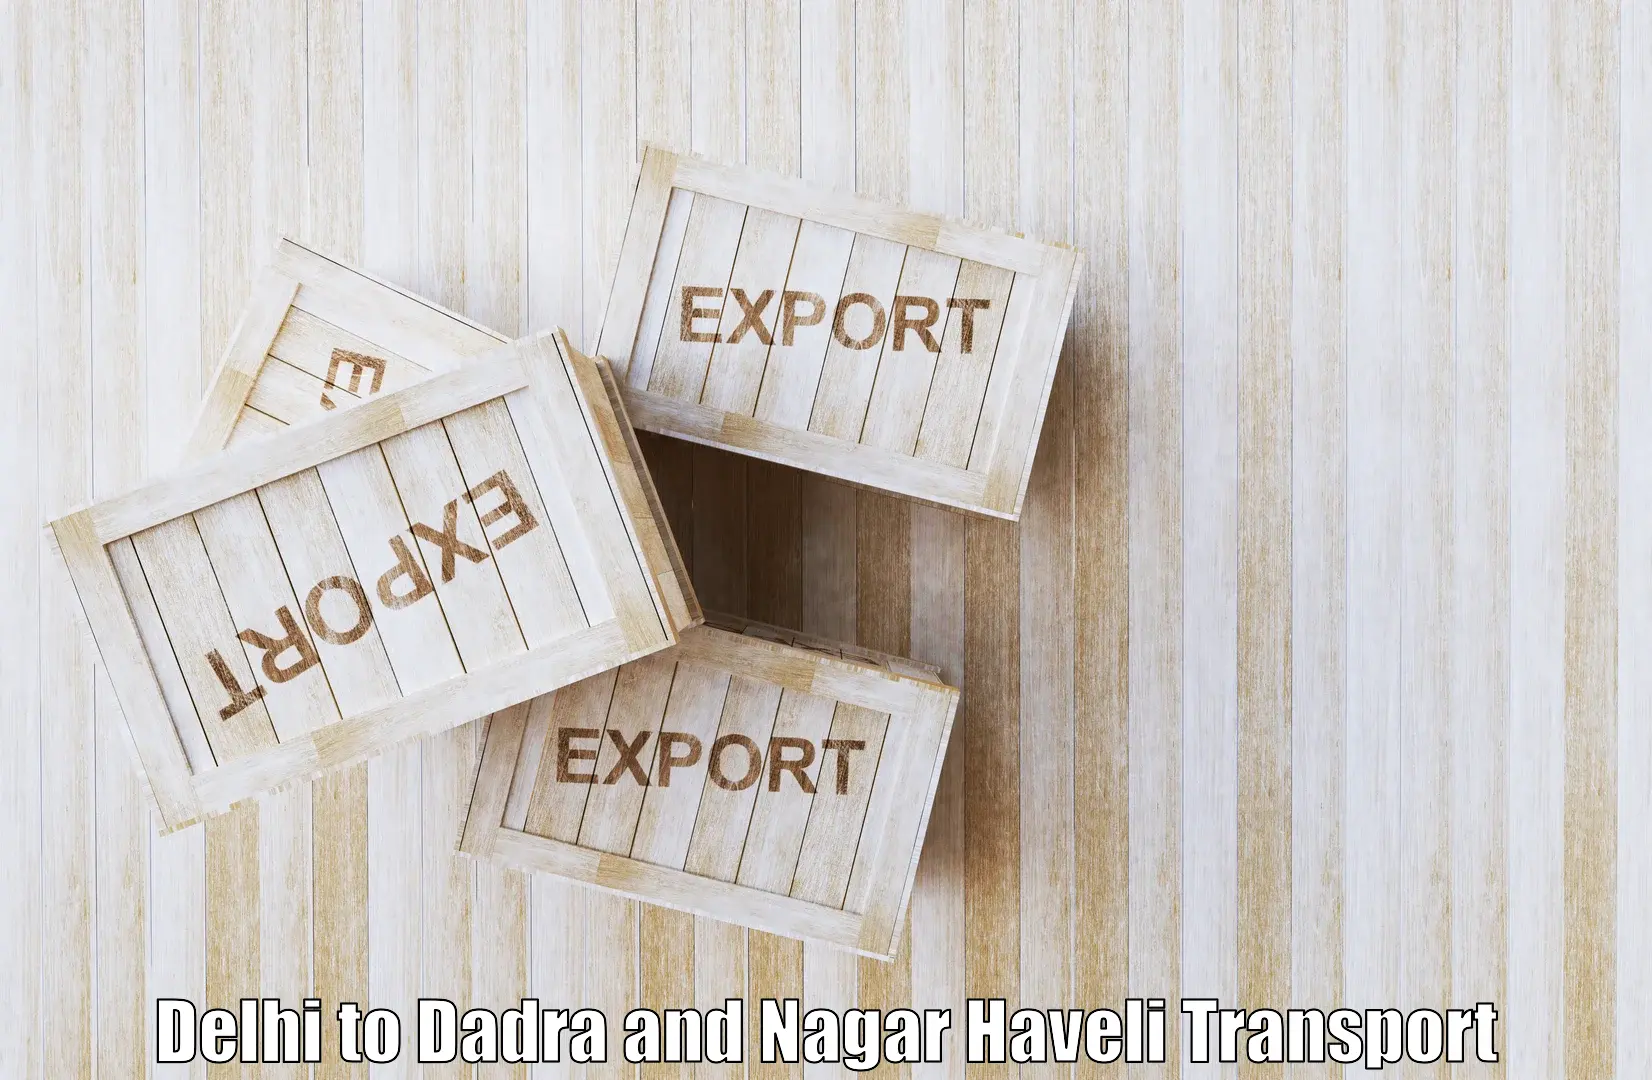 Daily parcel service transport Delhi to Dadra and Nagar Haveli